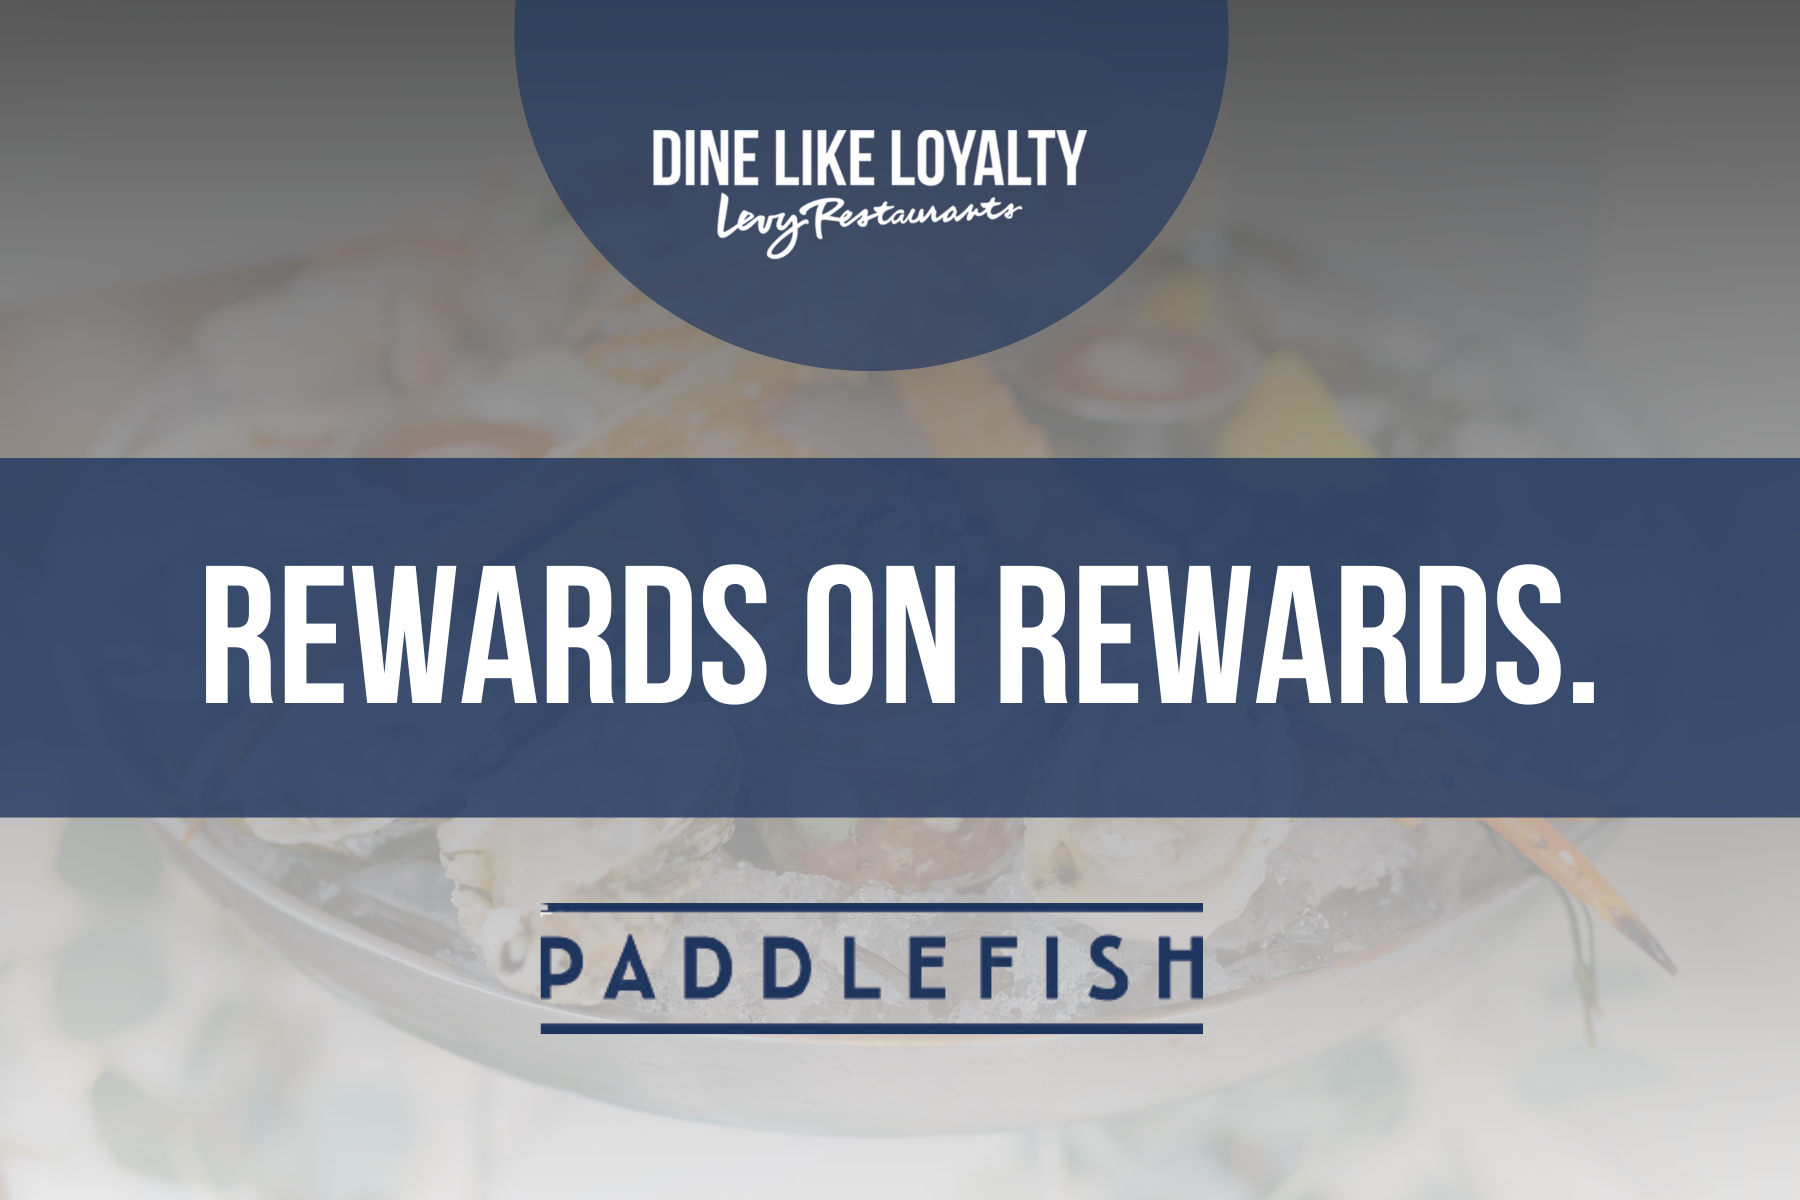 Get Rewarded at Paddlefish